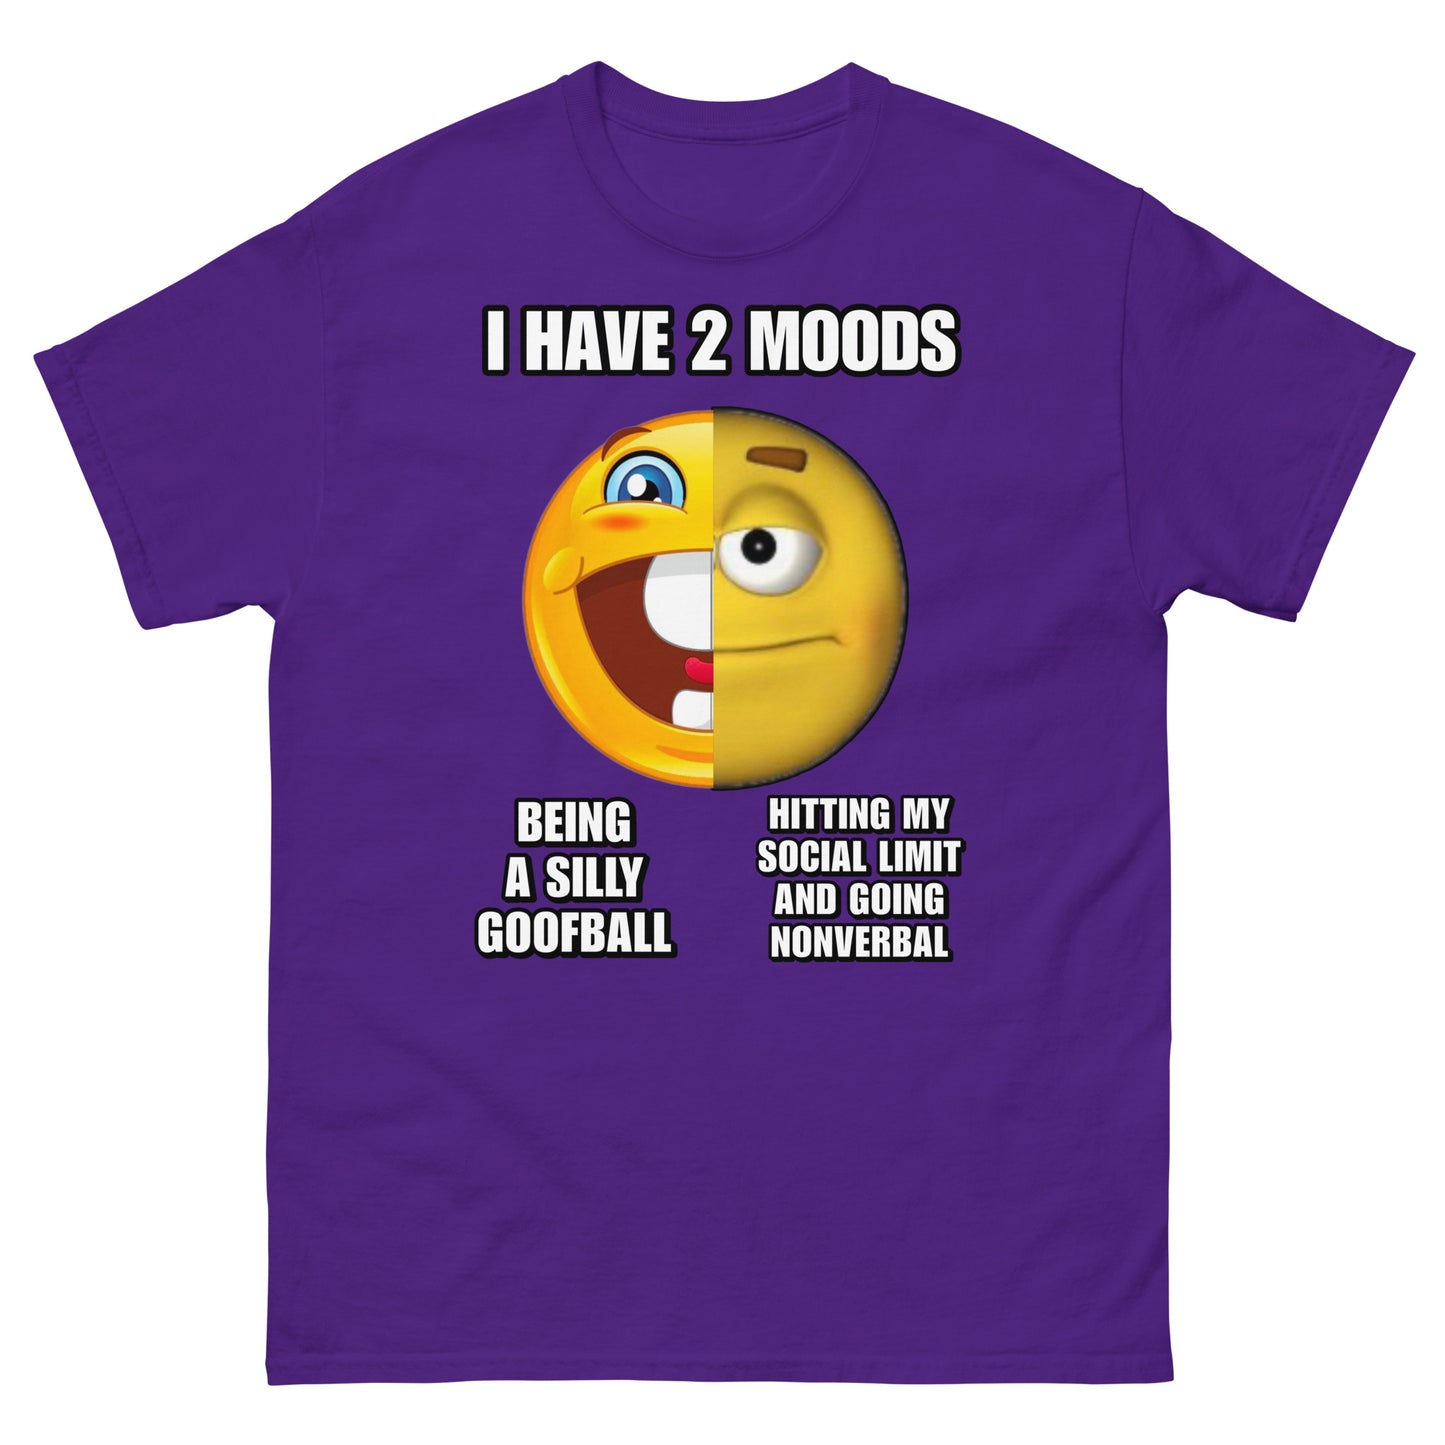 I have 2 moods Cringey Tee